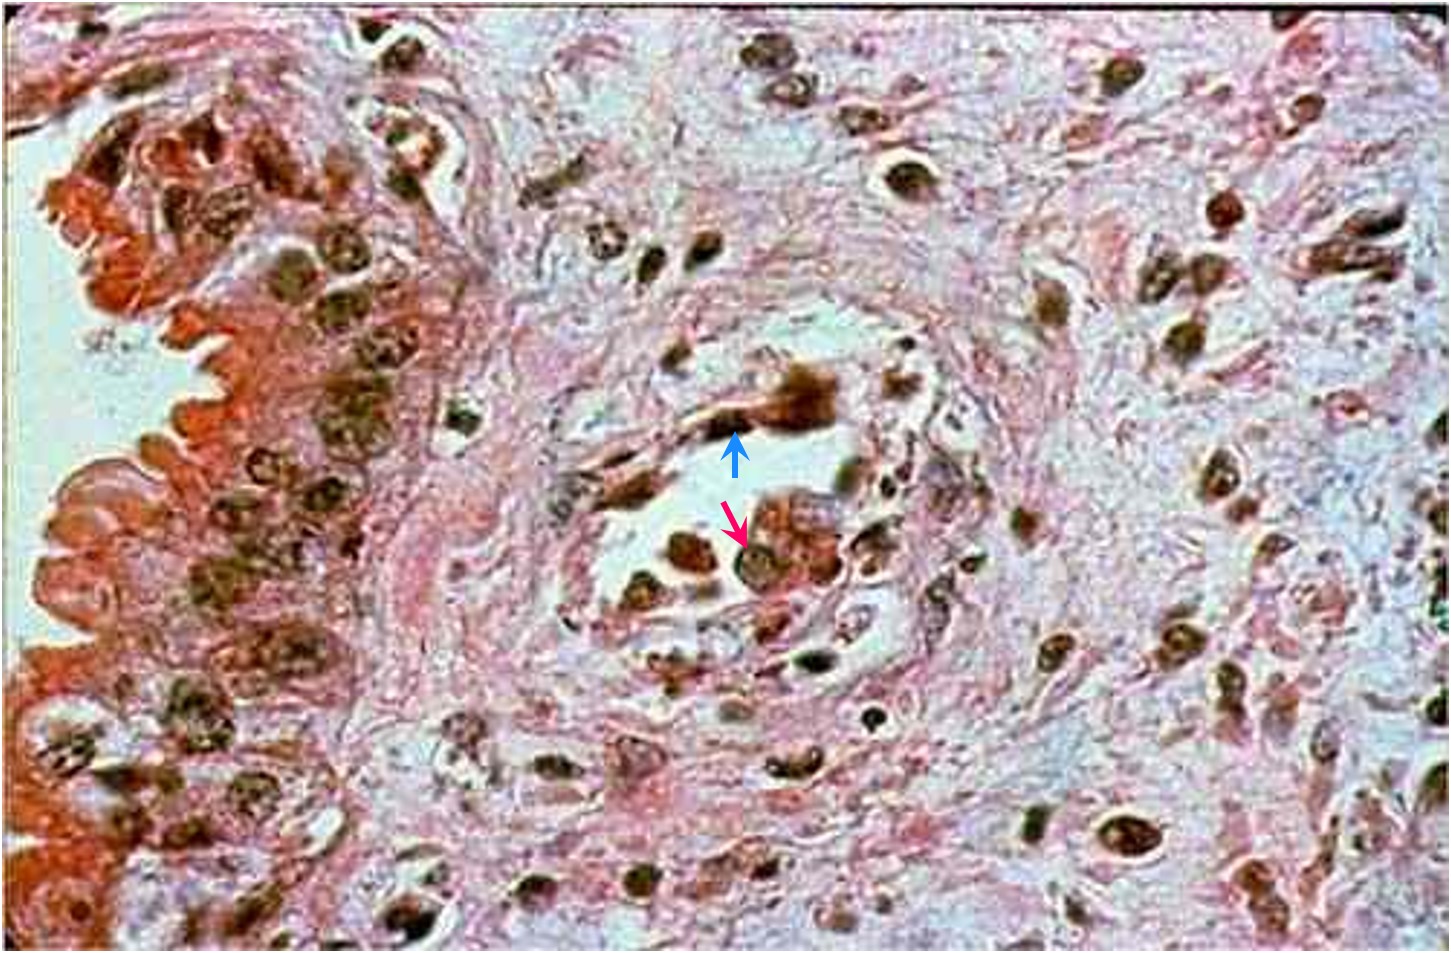 Viral abortion: Infectious bovine rhinotracheitis مشيمة بقرة مصابة بالتهاب الأنف و القصبة الهوائية البقري : موات الخلايا المبطنة للأوعية مع وجود اجسم احتوائية فيها